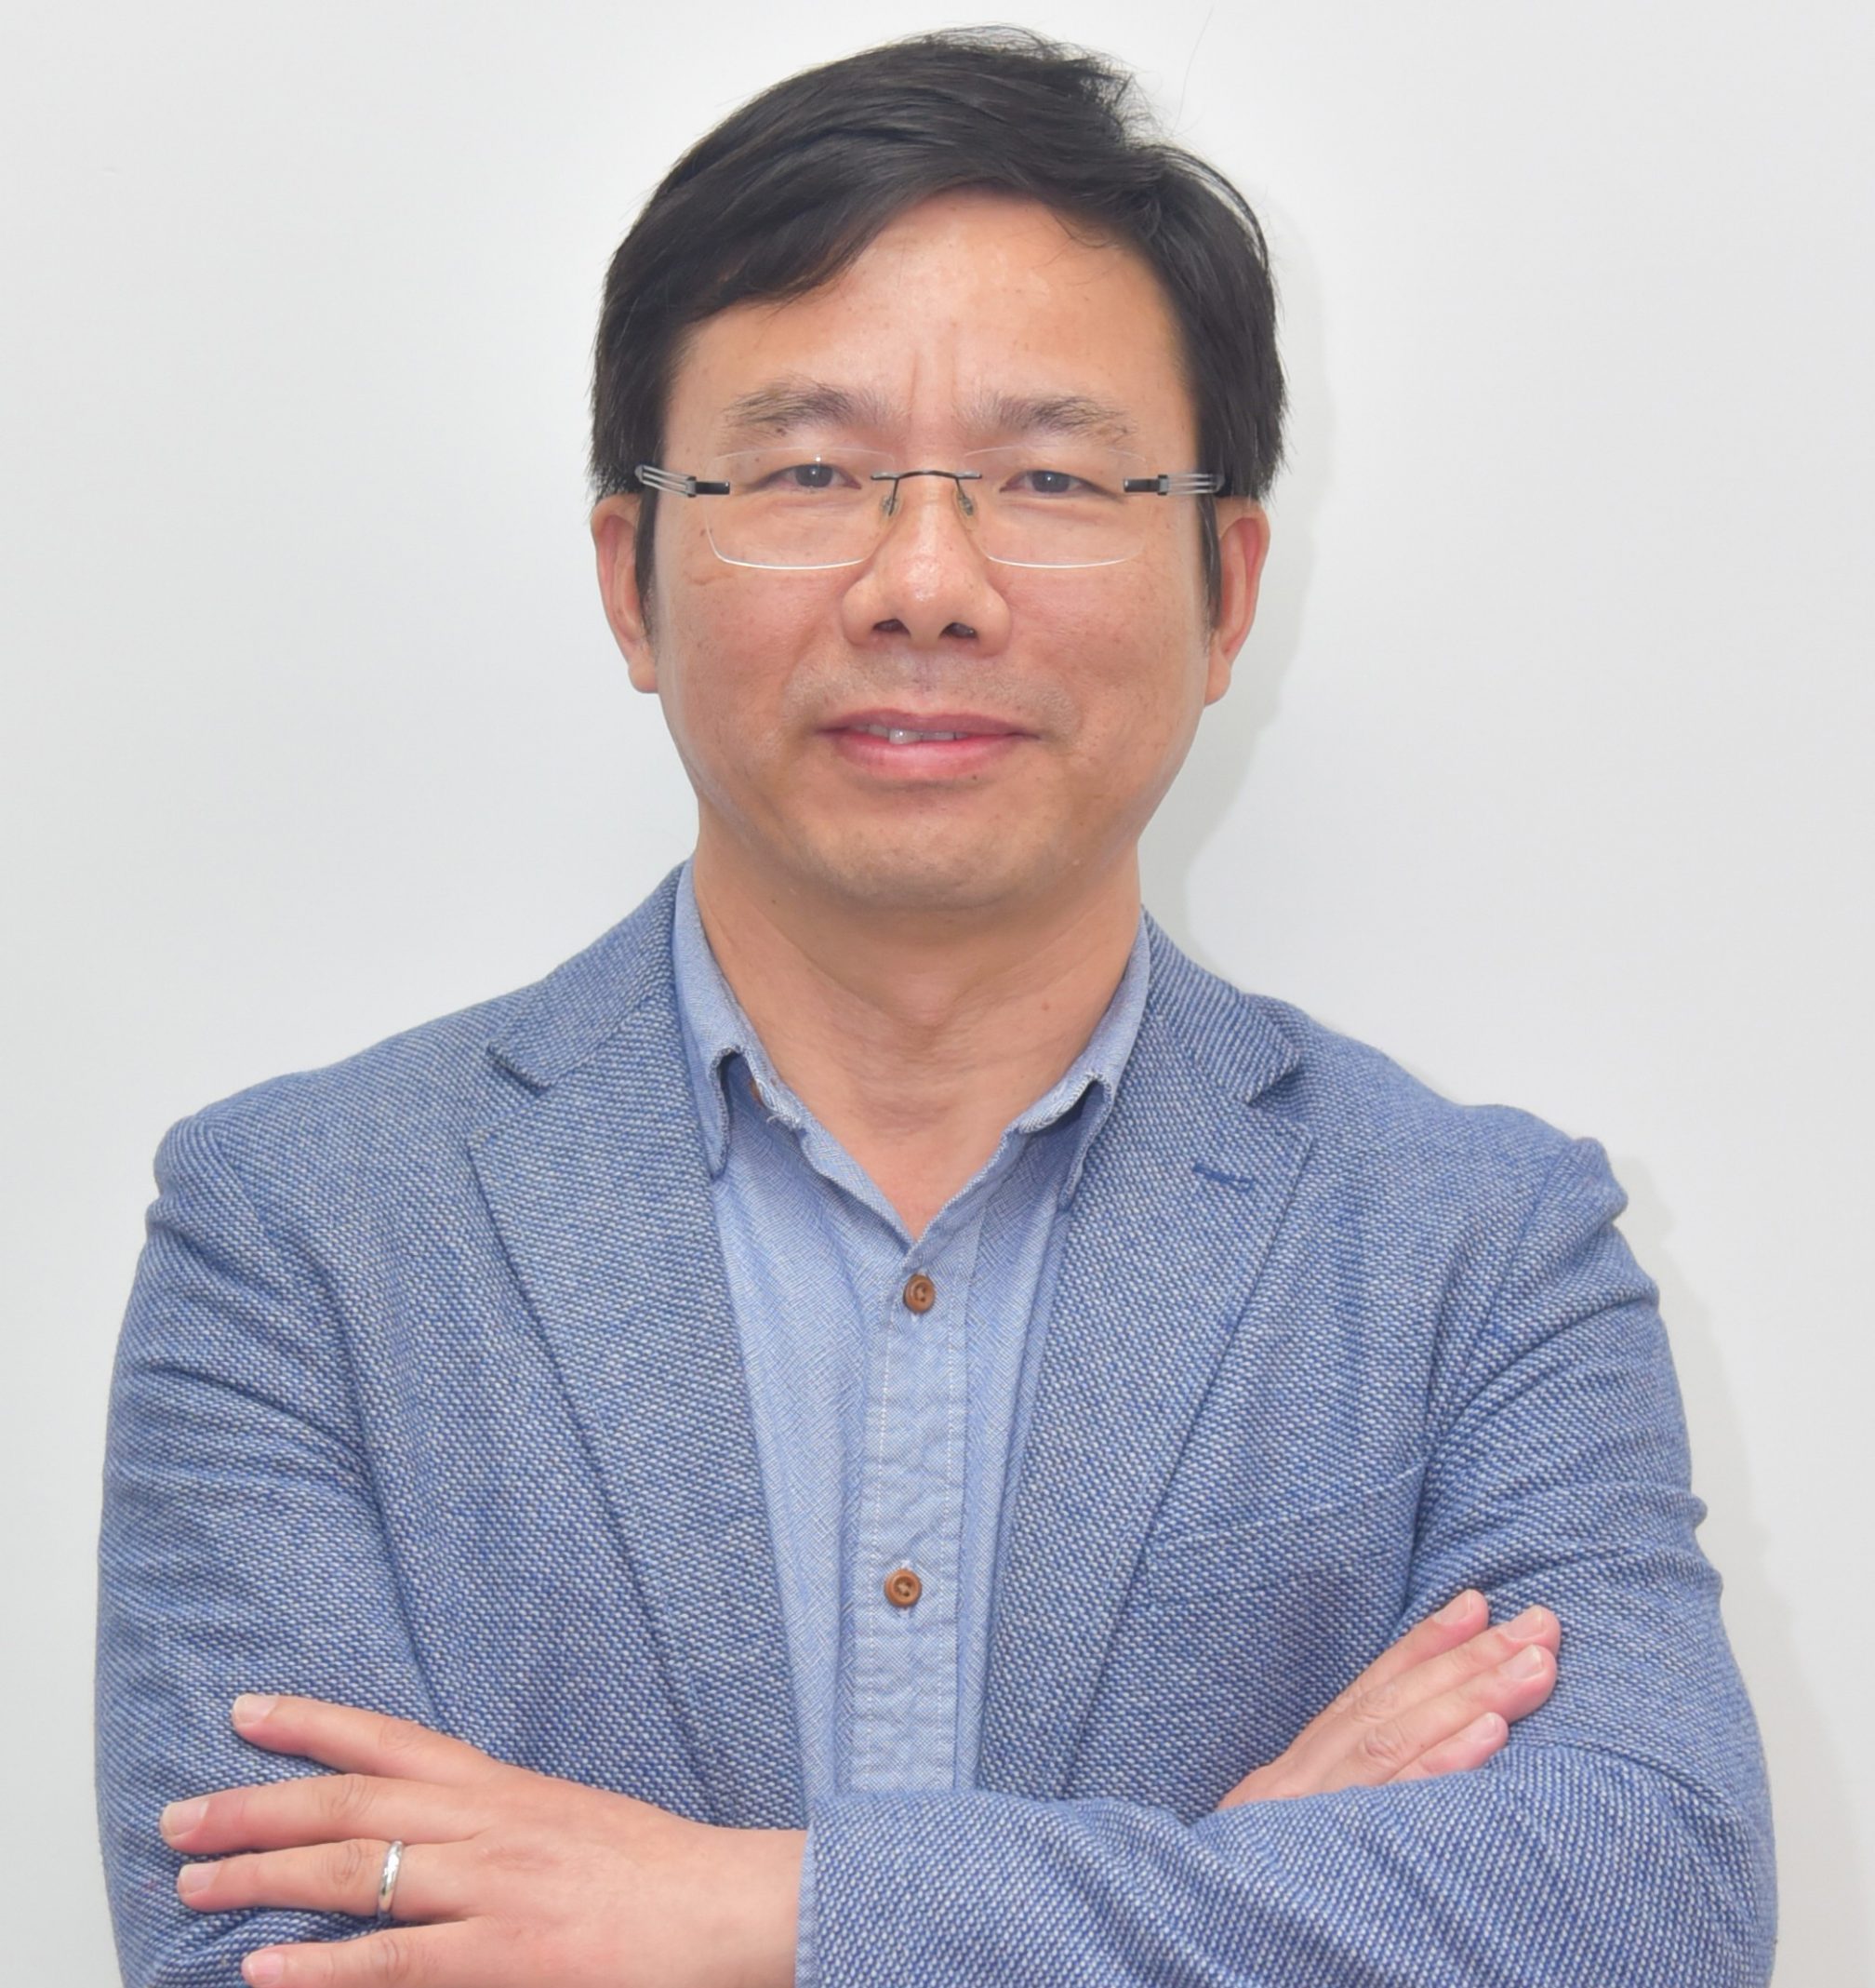 Prof. Shao Ping LI